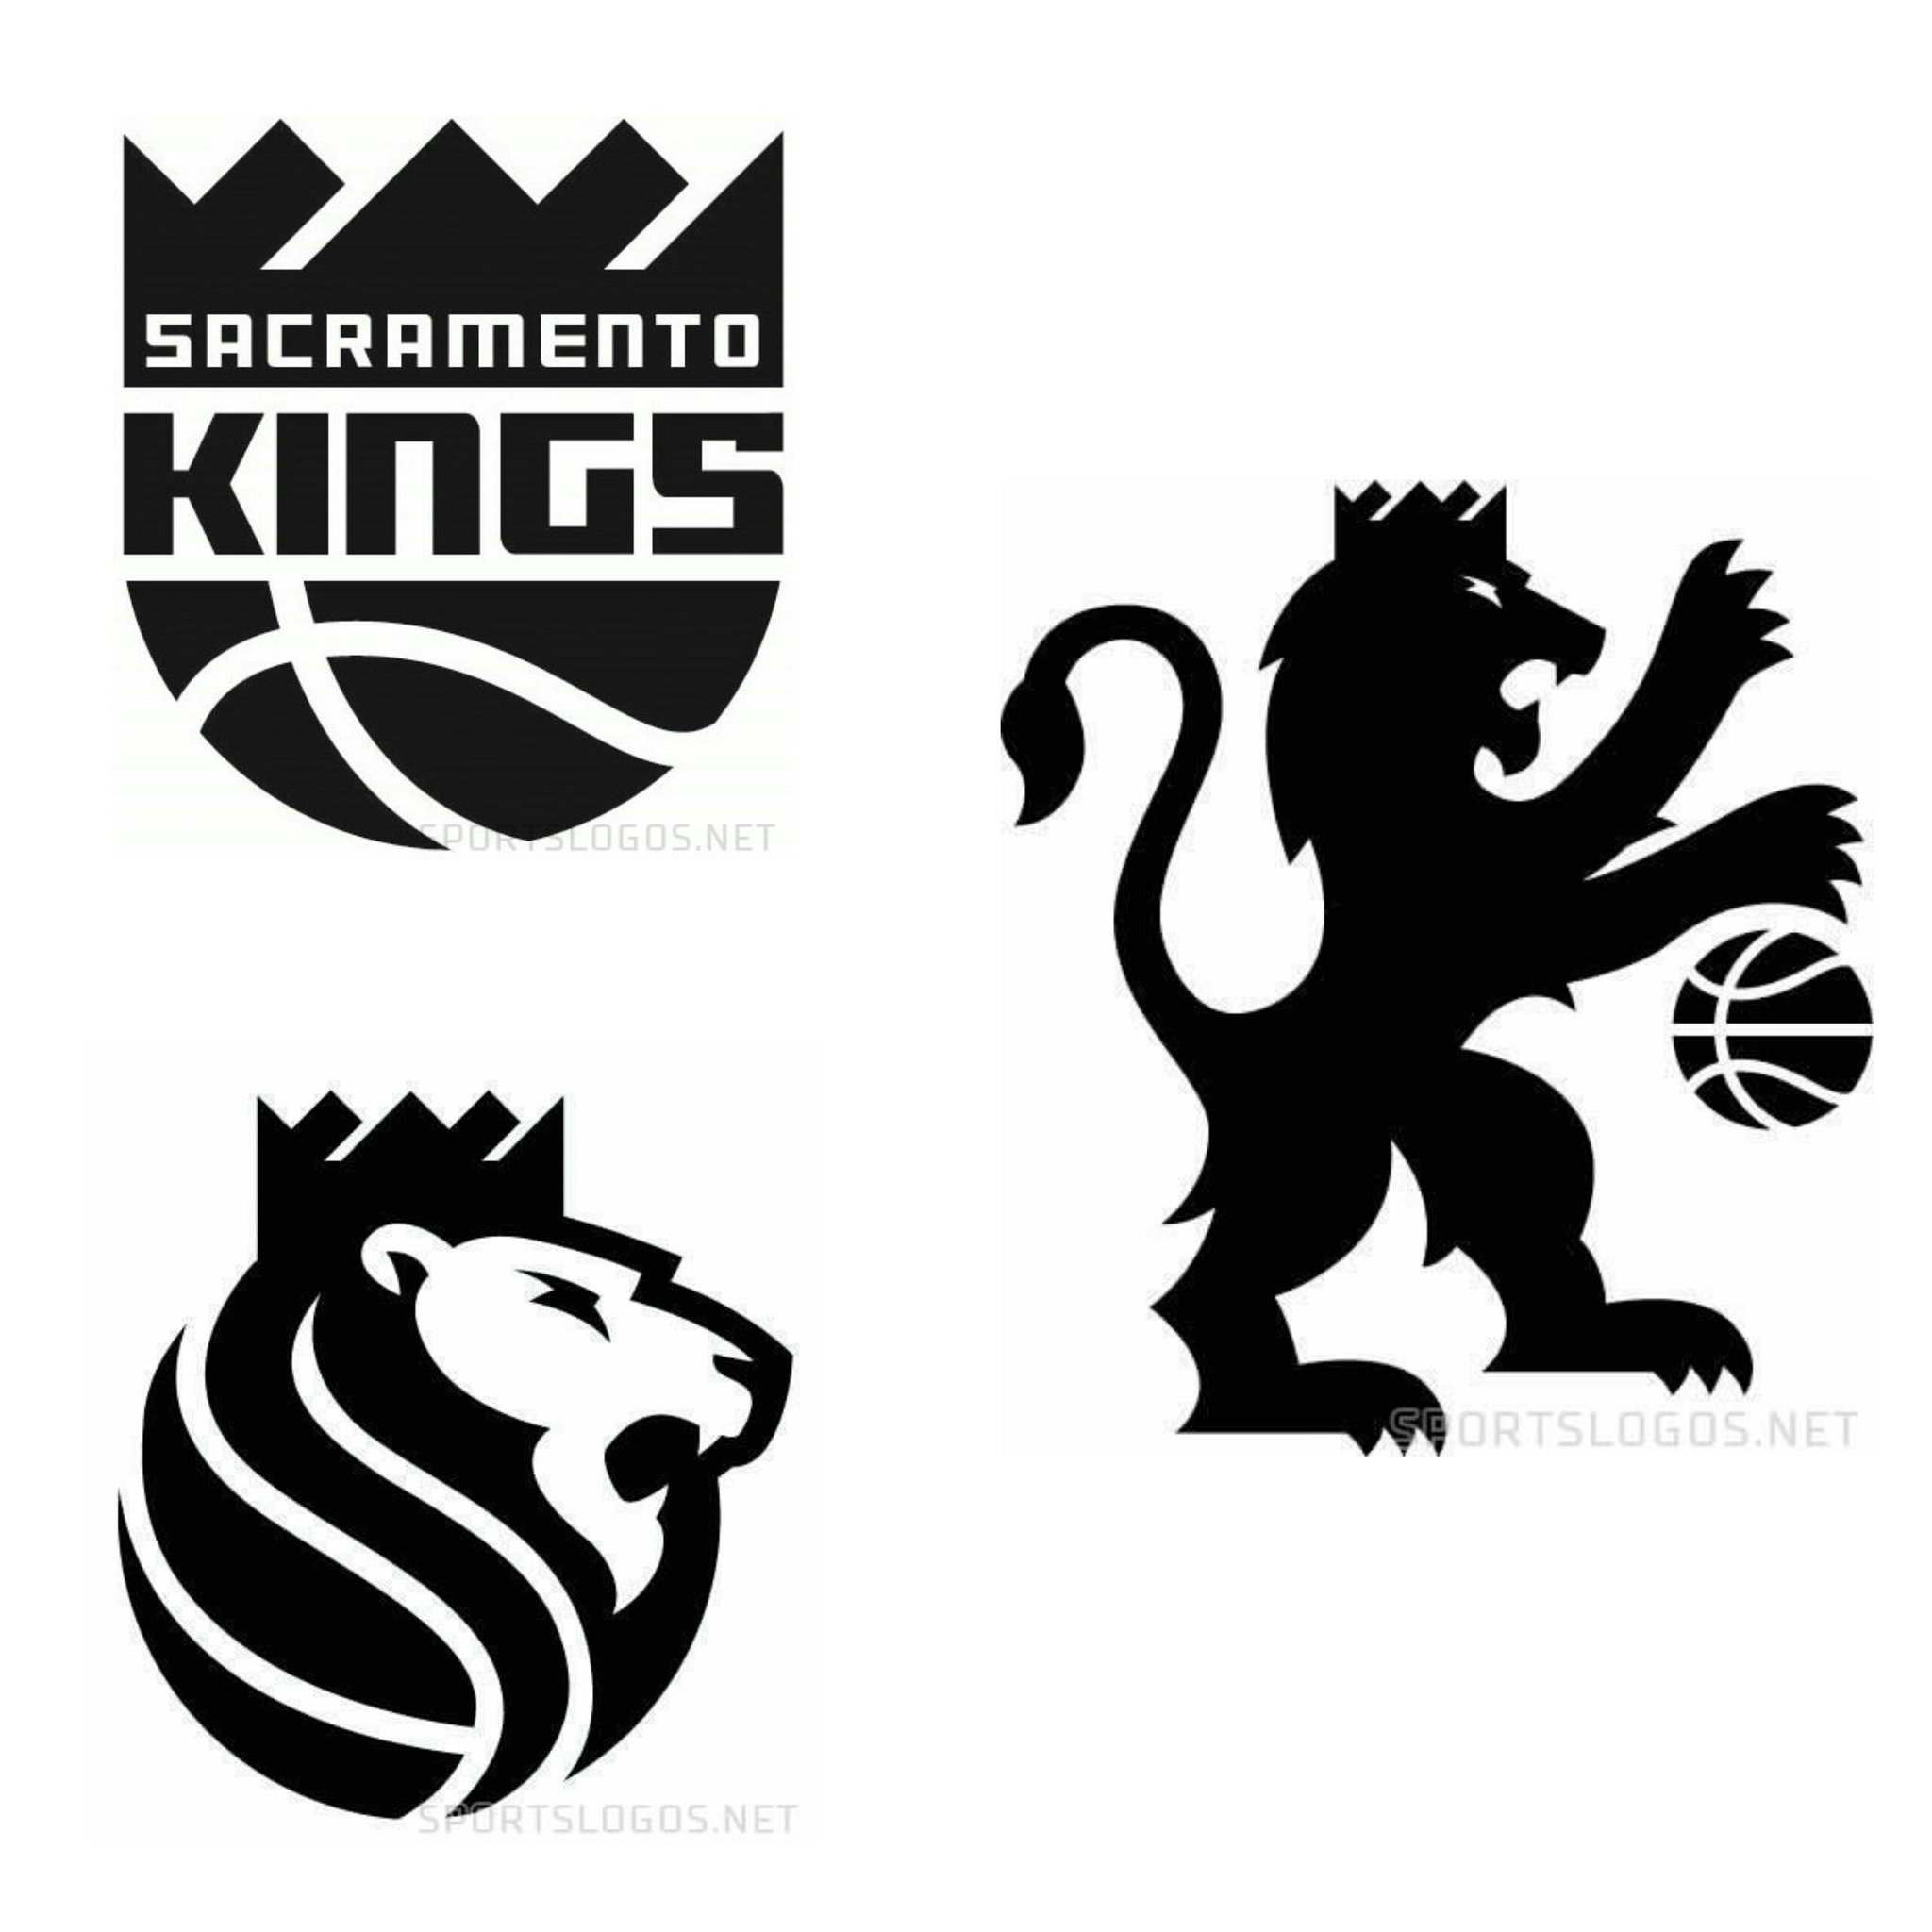 New Sacramento Kings Logo Leaked – SportsLogos.Net News